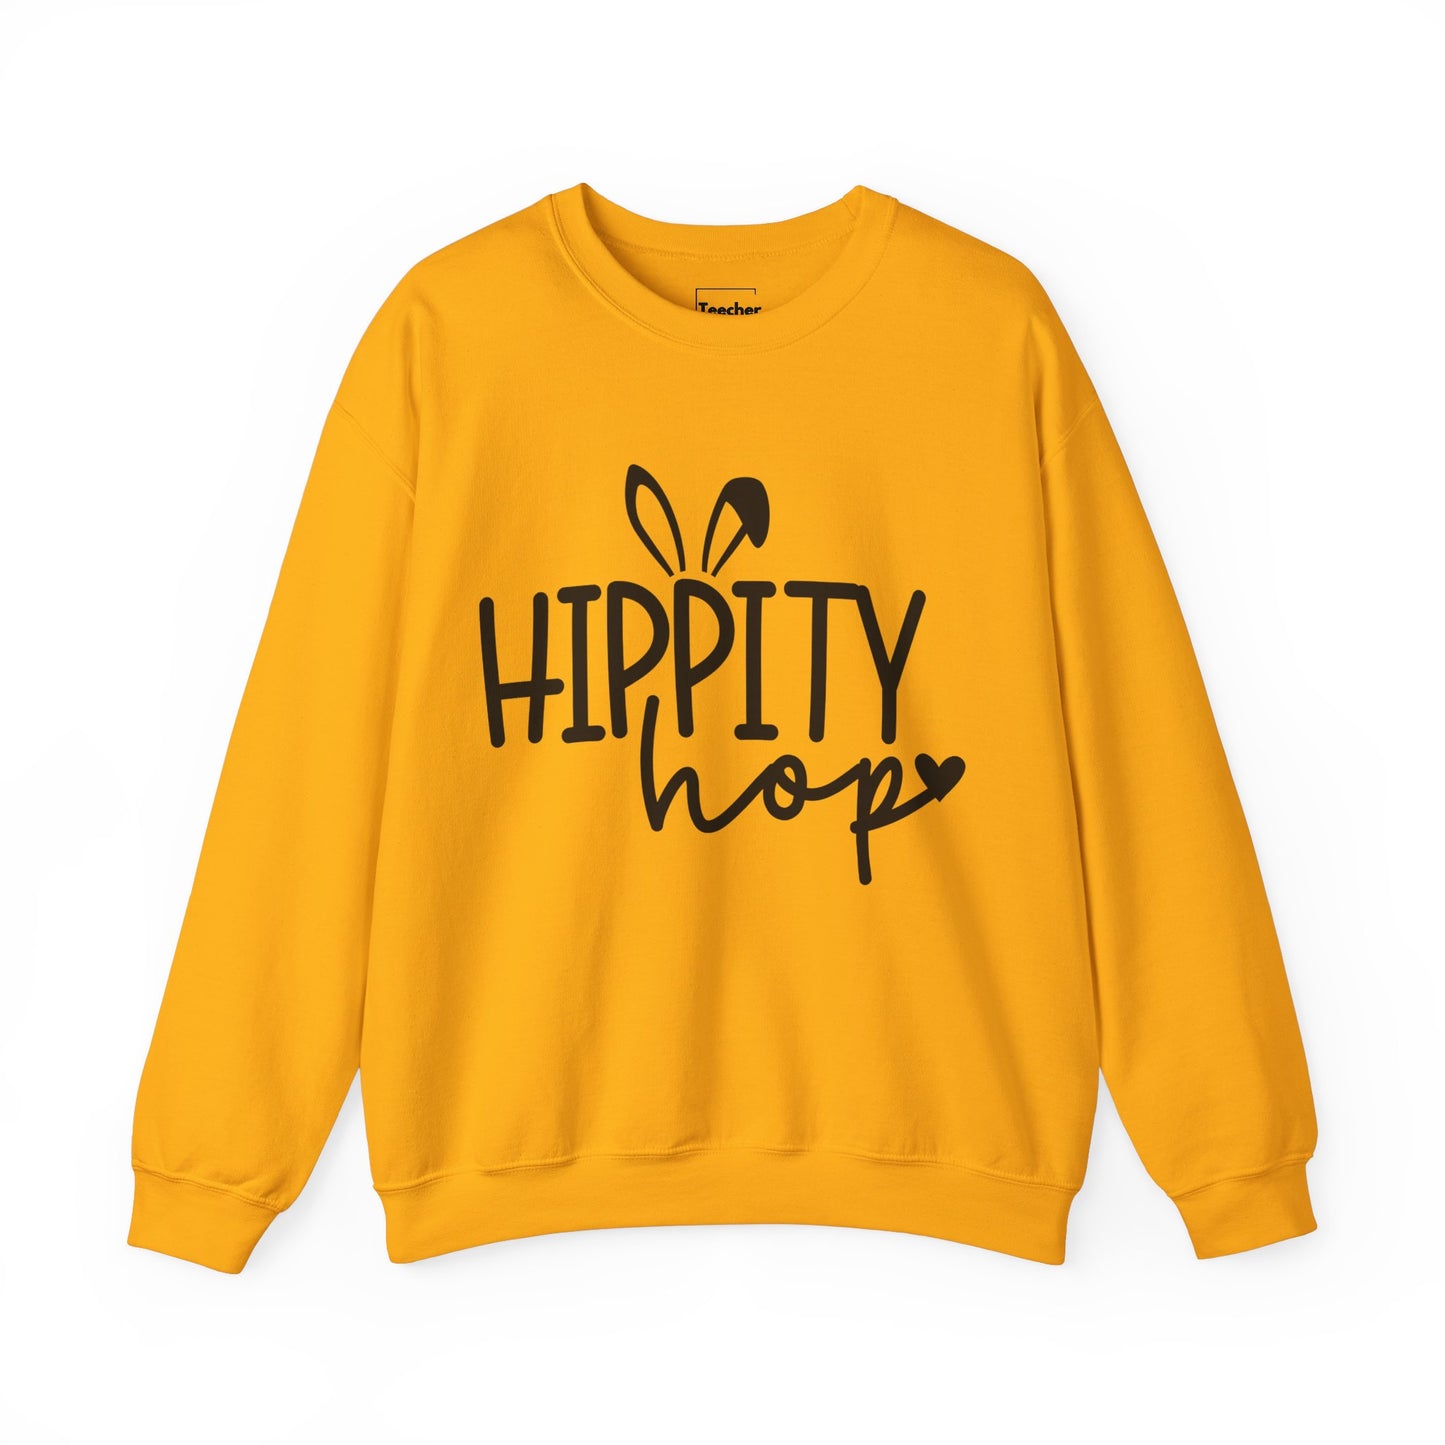 Hippity Hop Sweatshirt